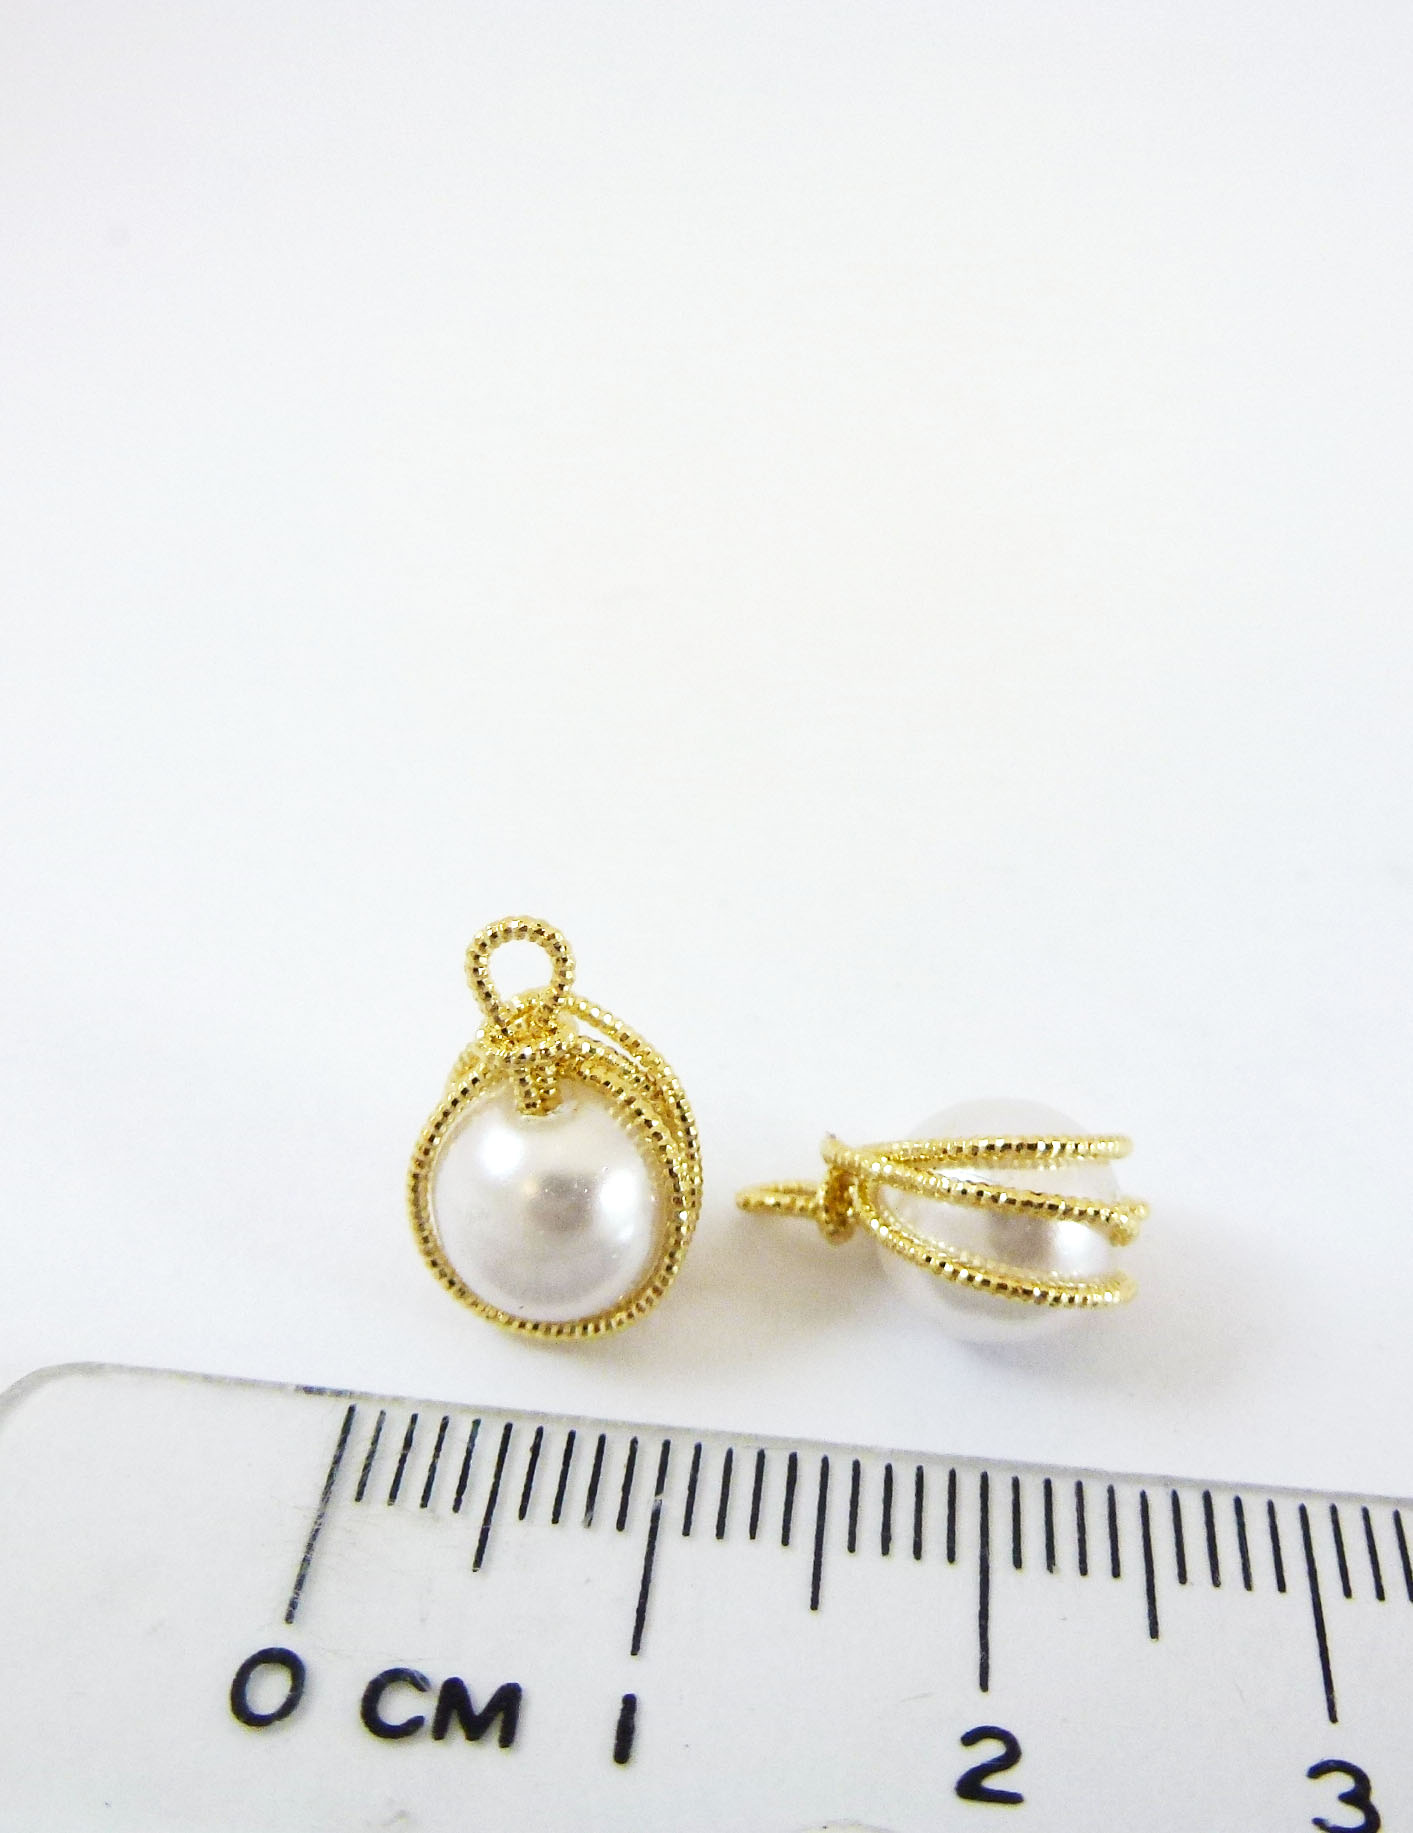 8mm銅鍍金色線繞三圈珍珠